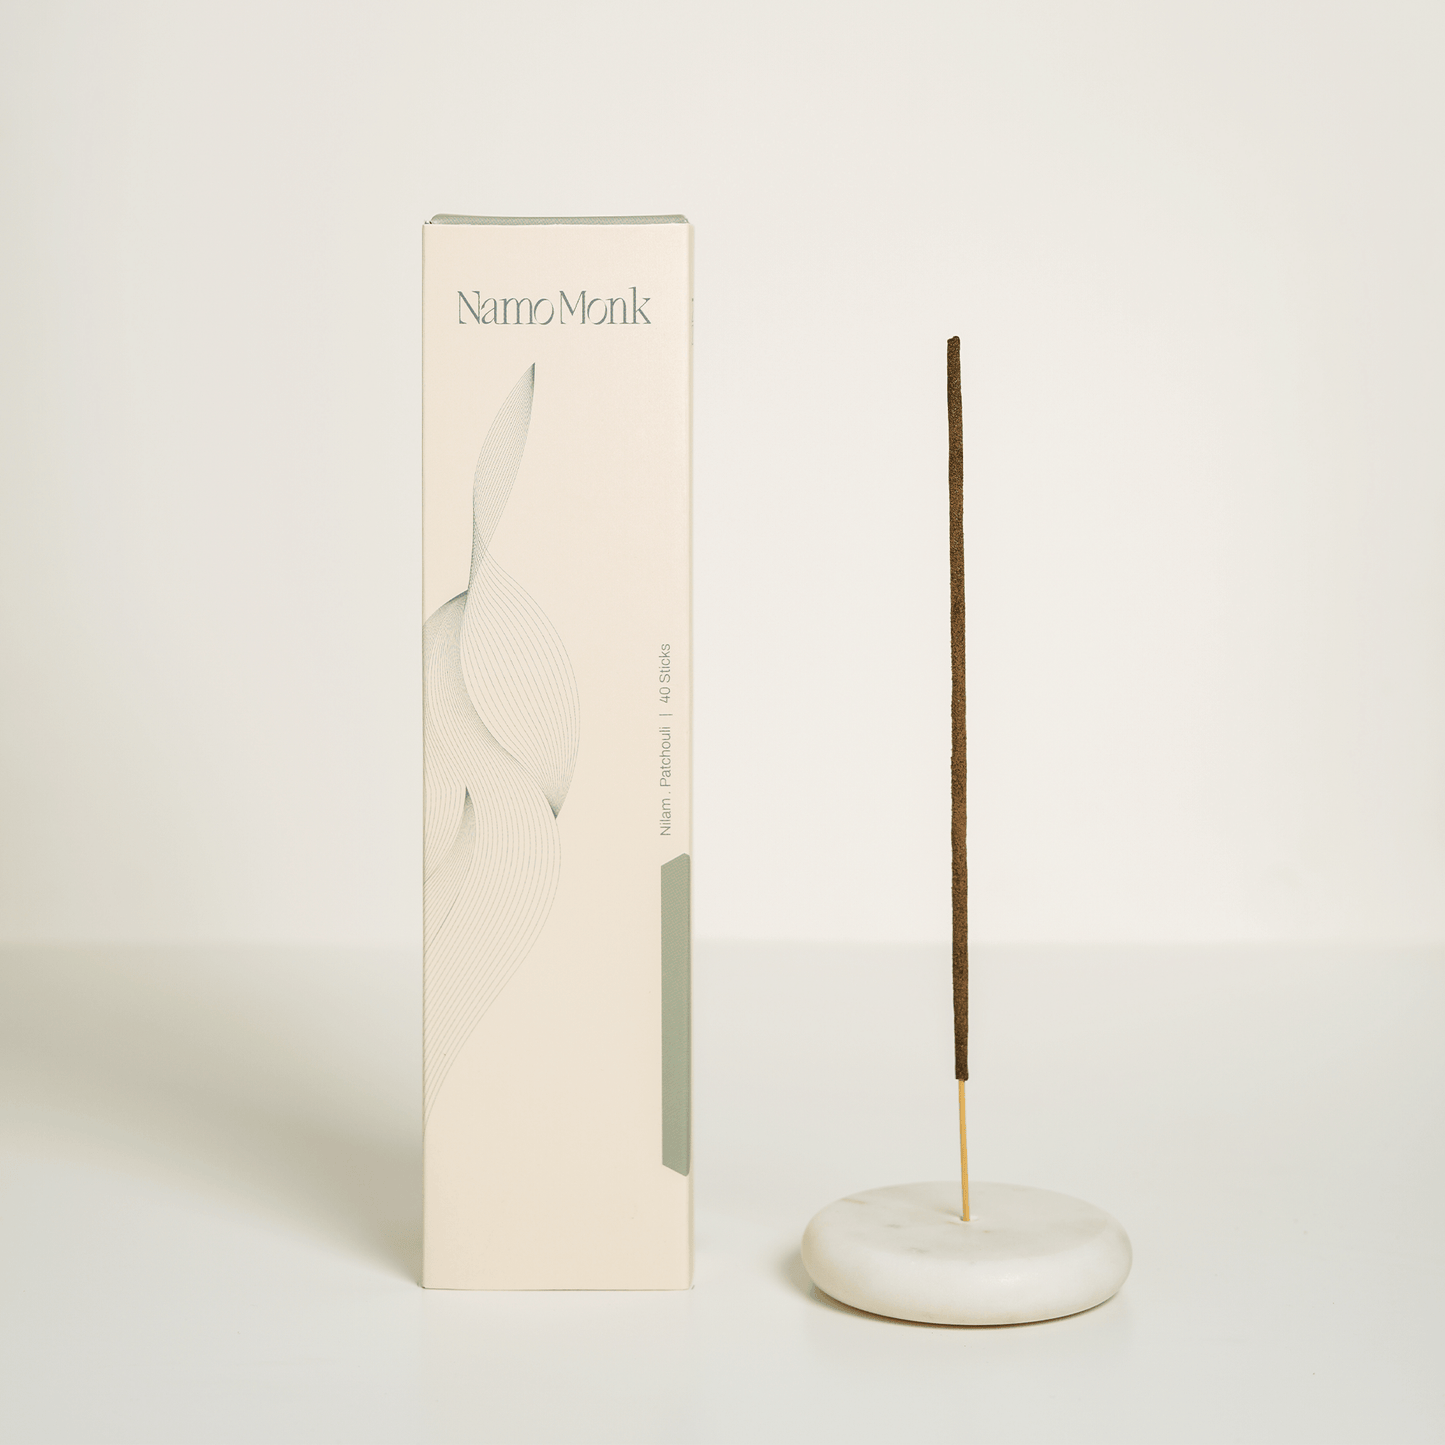 Nilam . Patchouli Incense Sticks